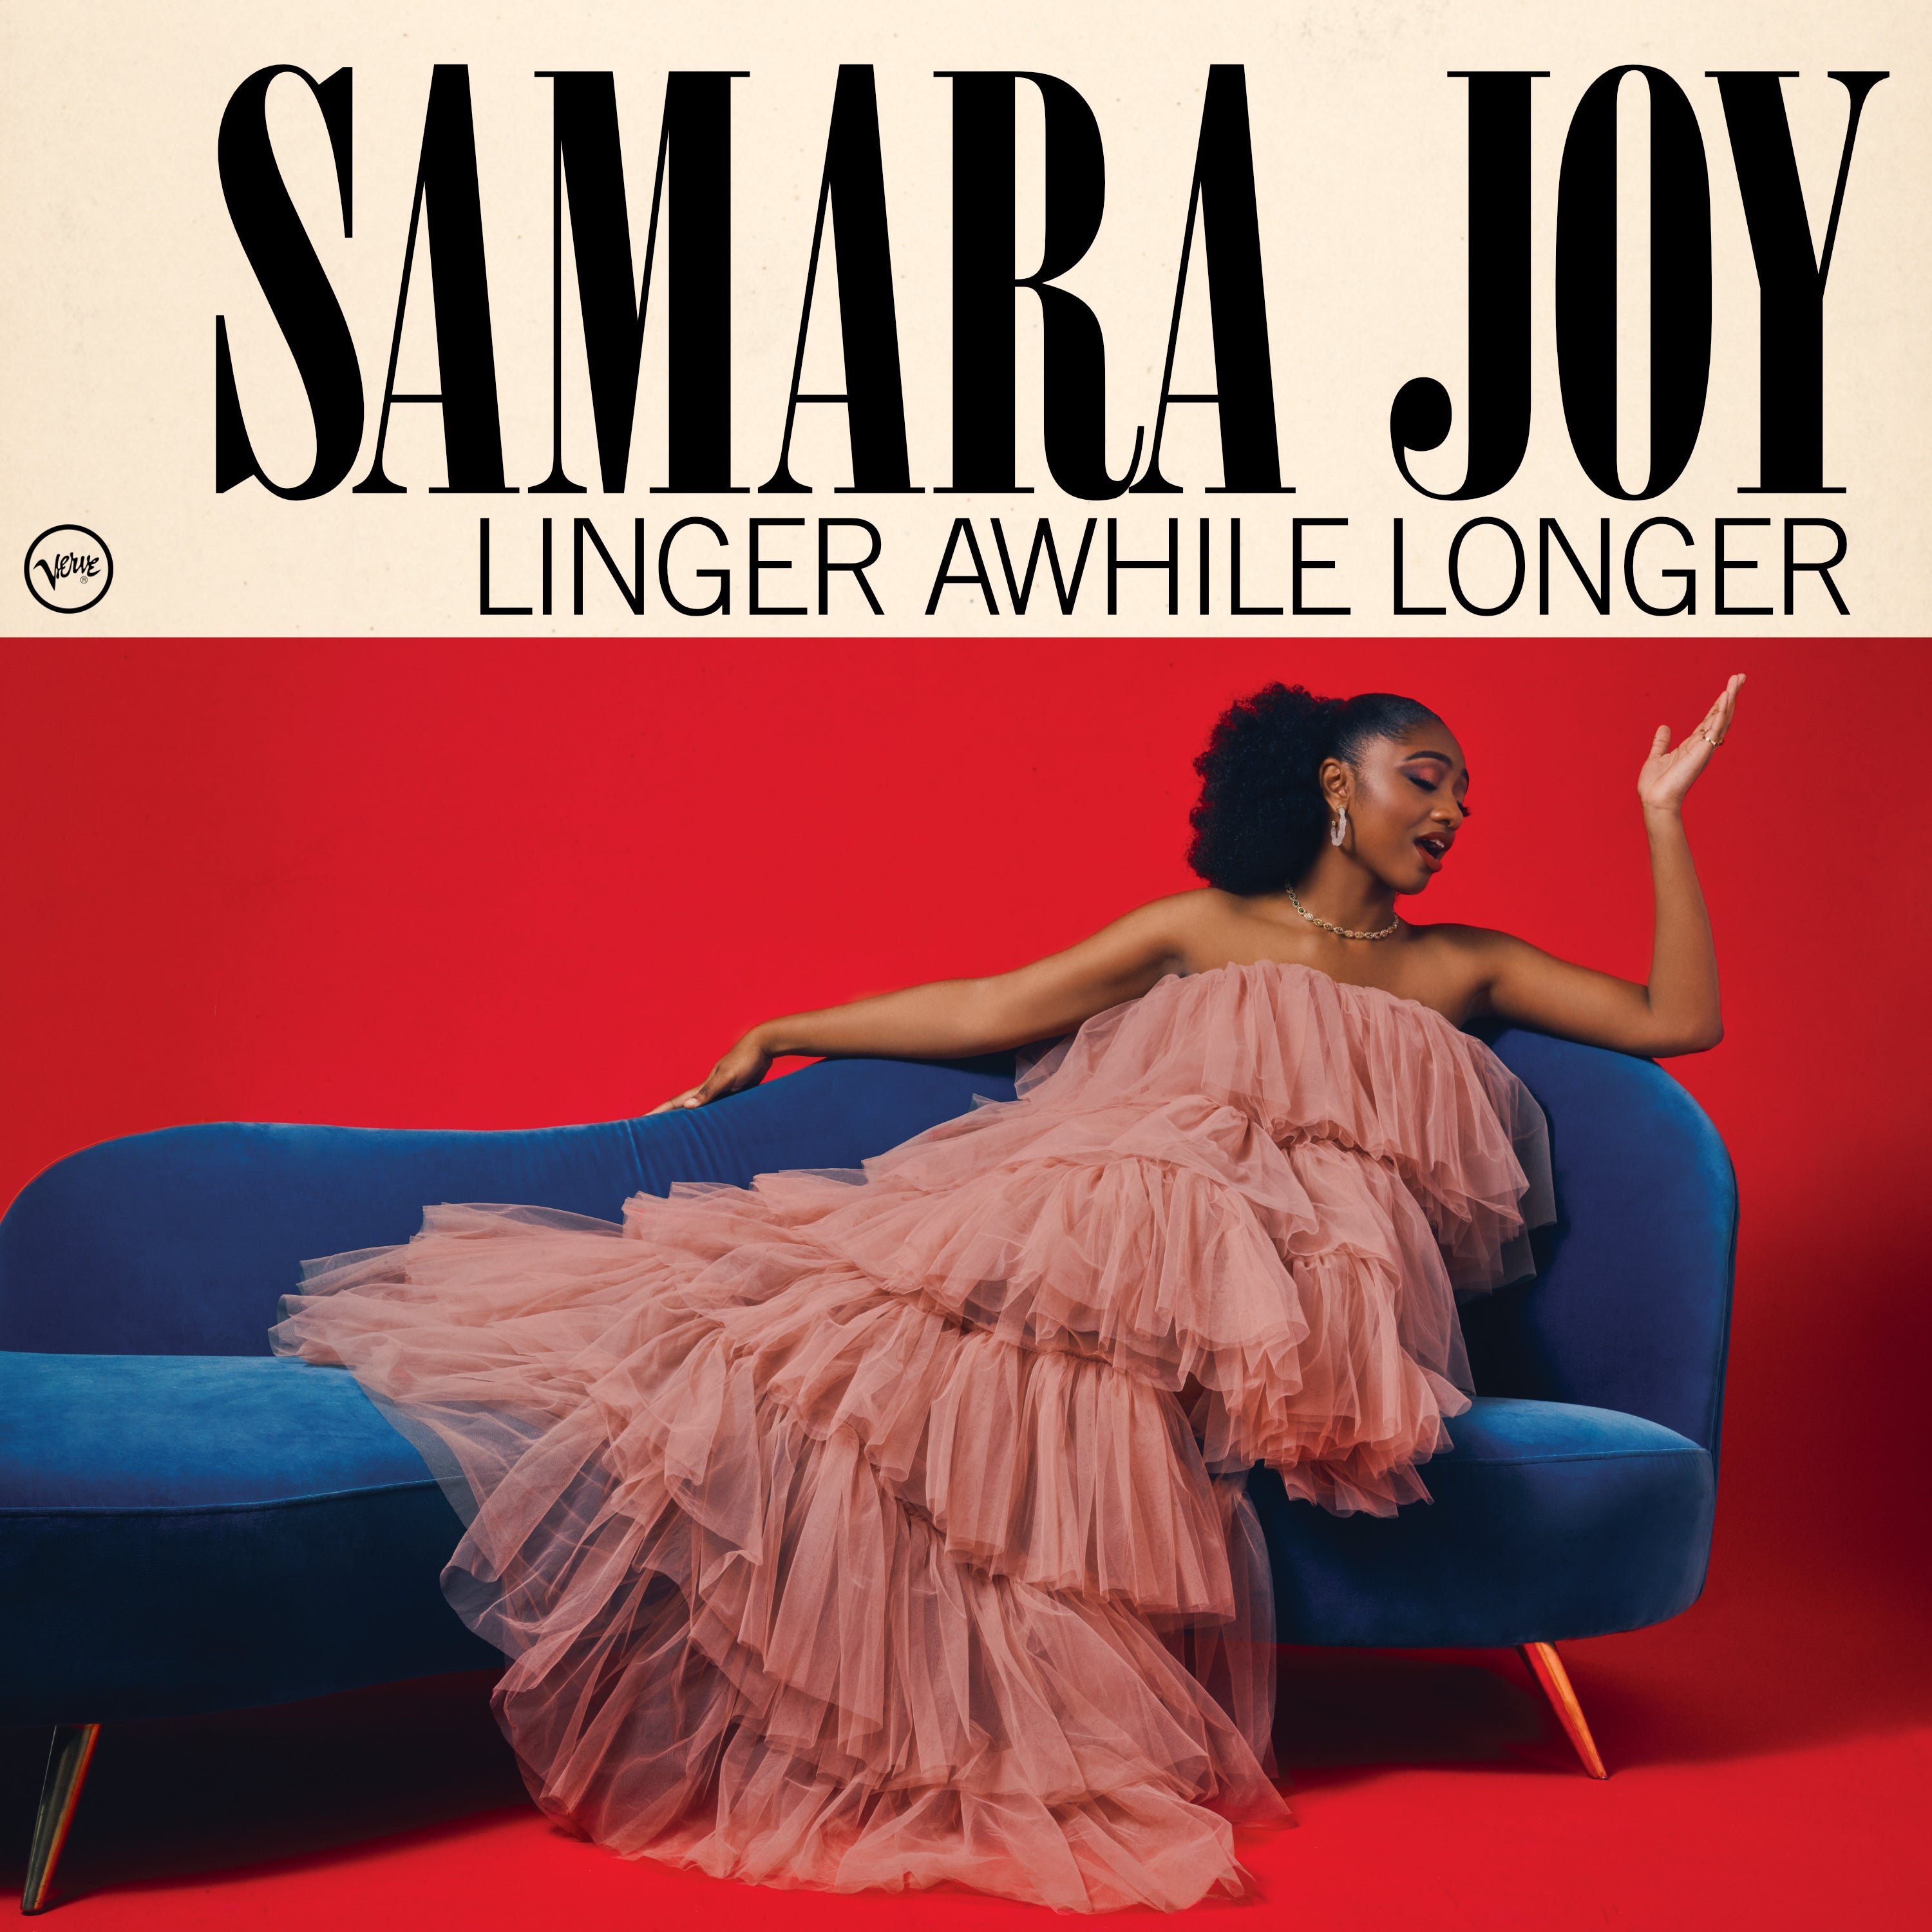 Samara Joy - Linger Awhile Longer: Vinyl LP